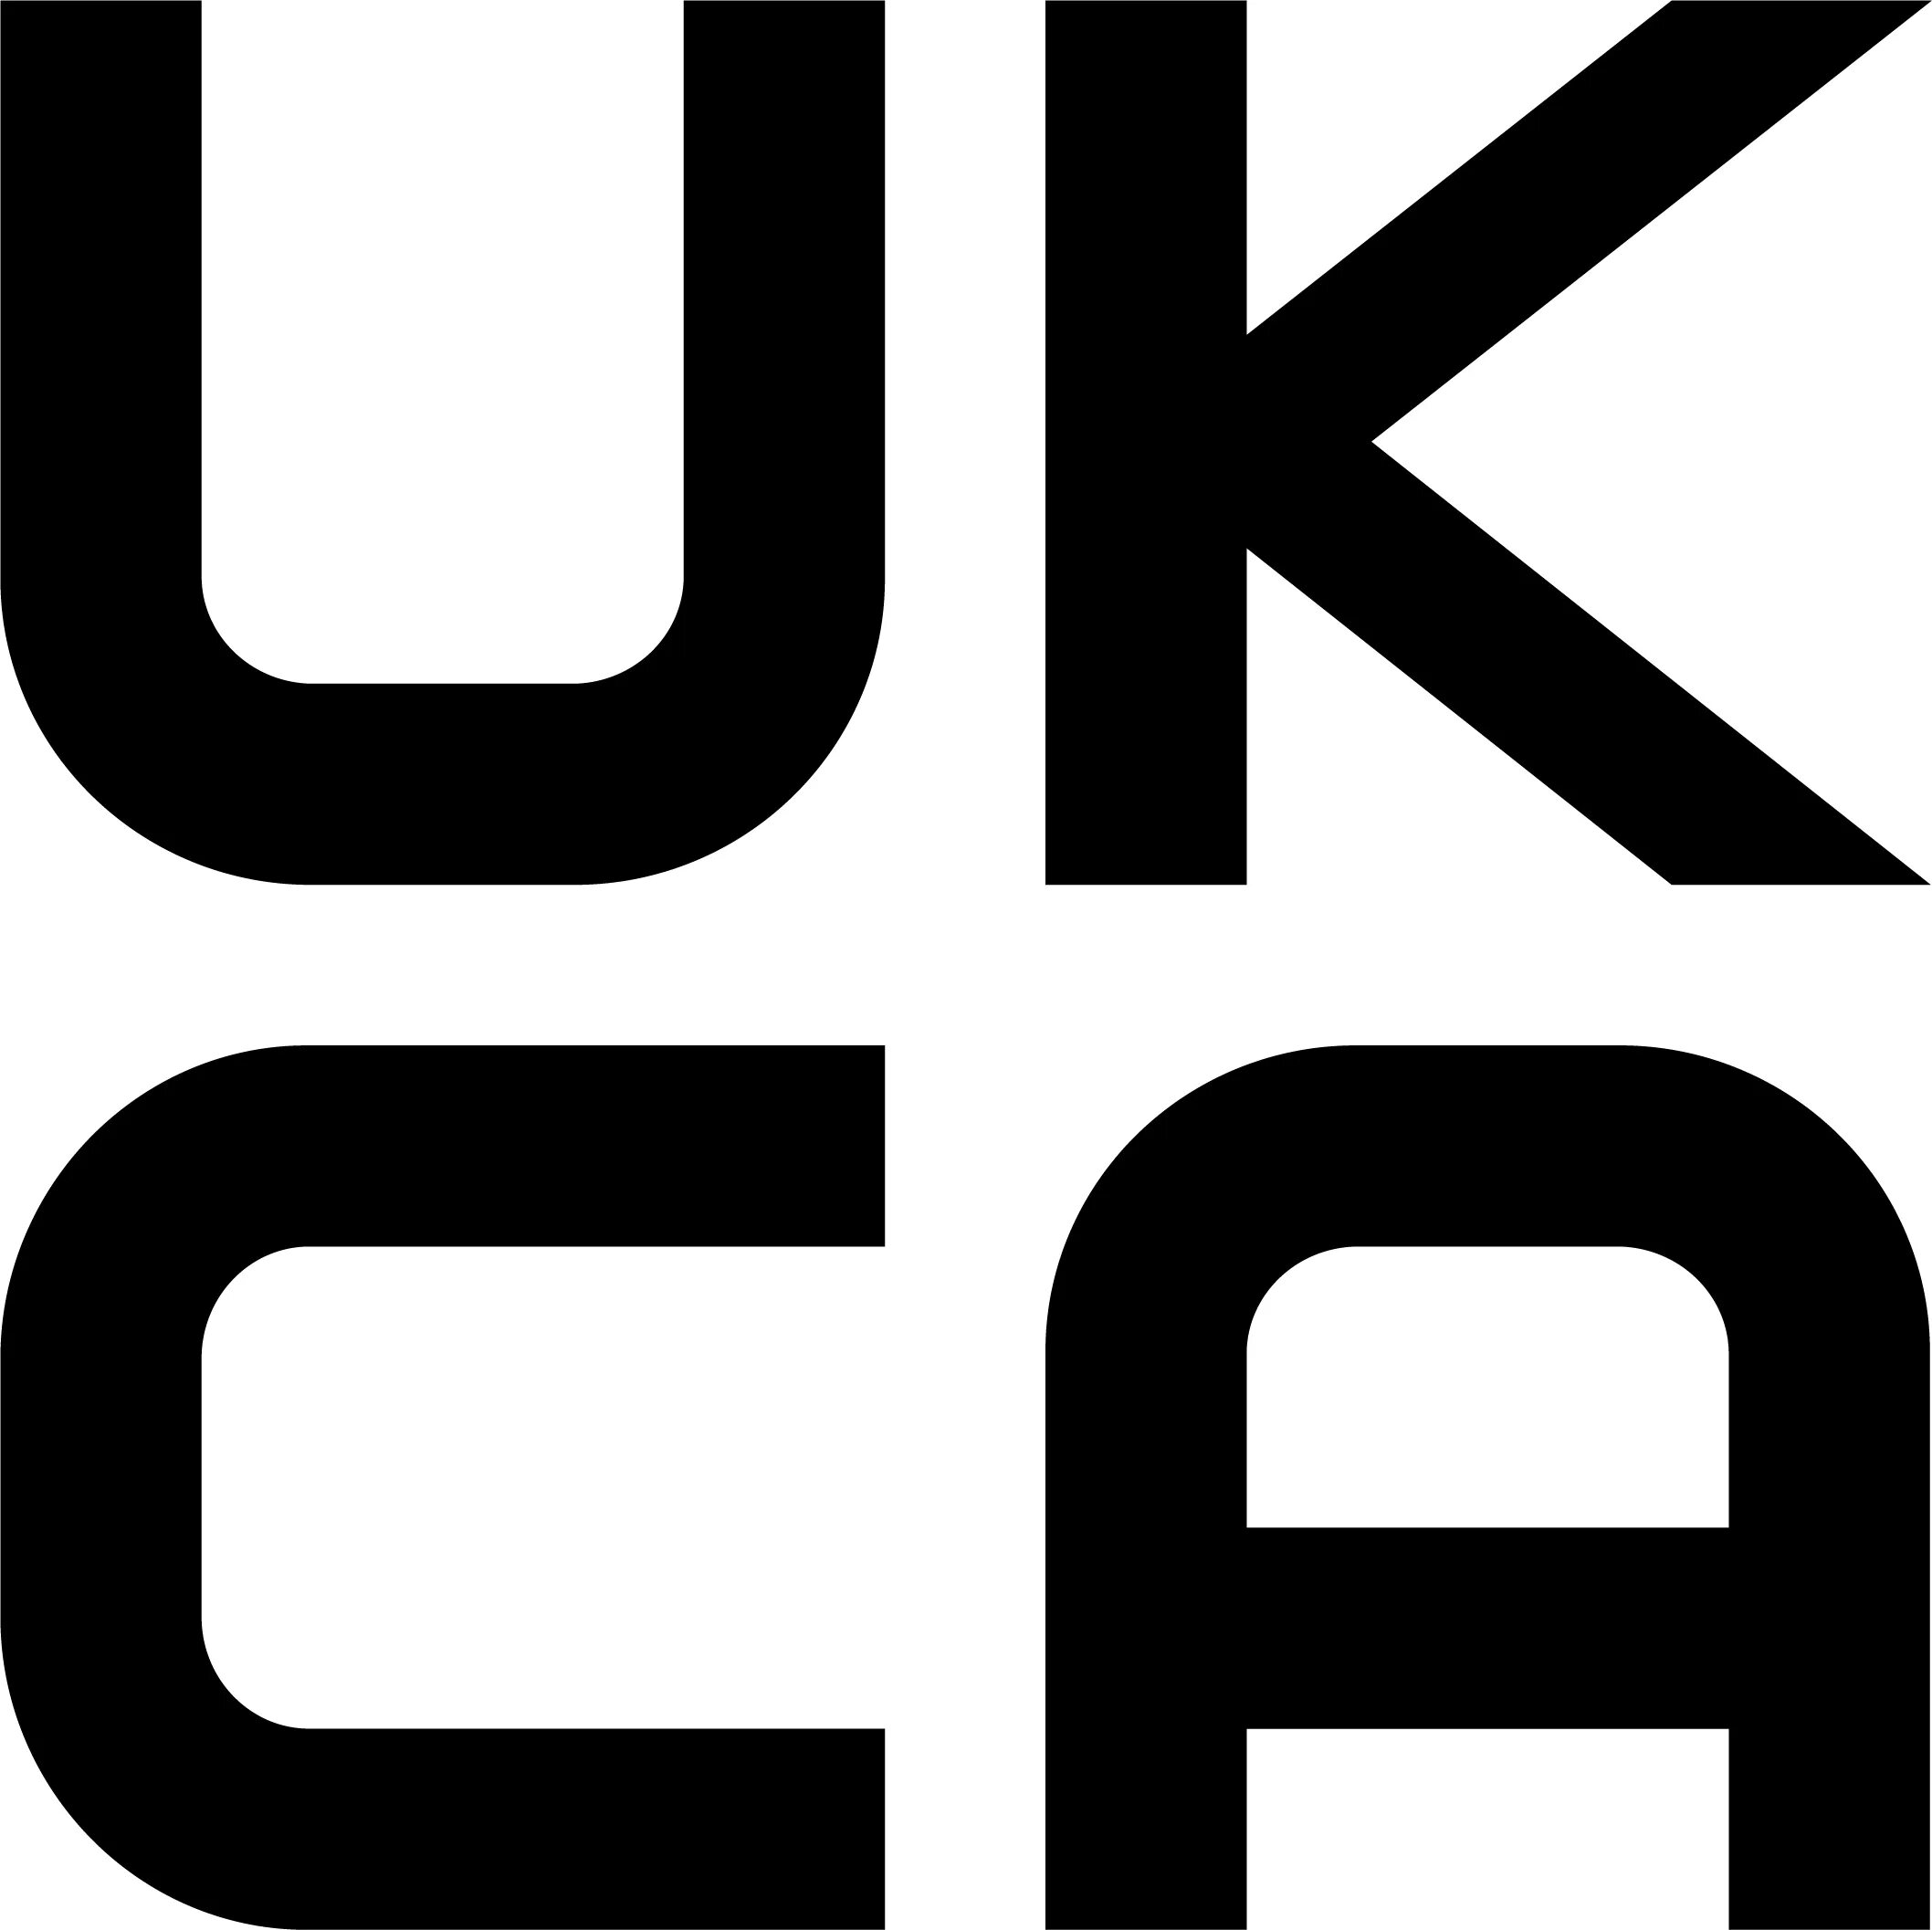 Uk ca. Xiaomi communications co Ltd. FH 25 лого. UKCA Подик. UKCA вектор.